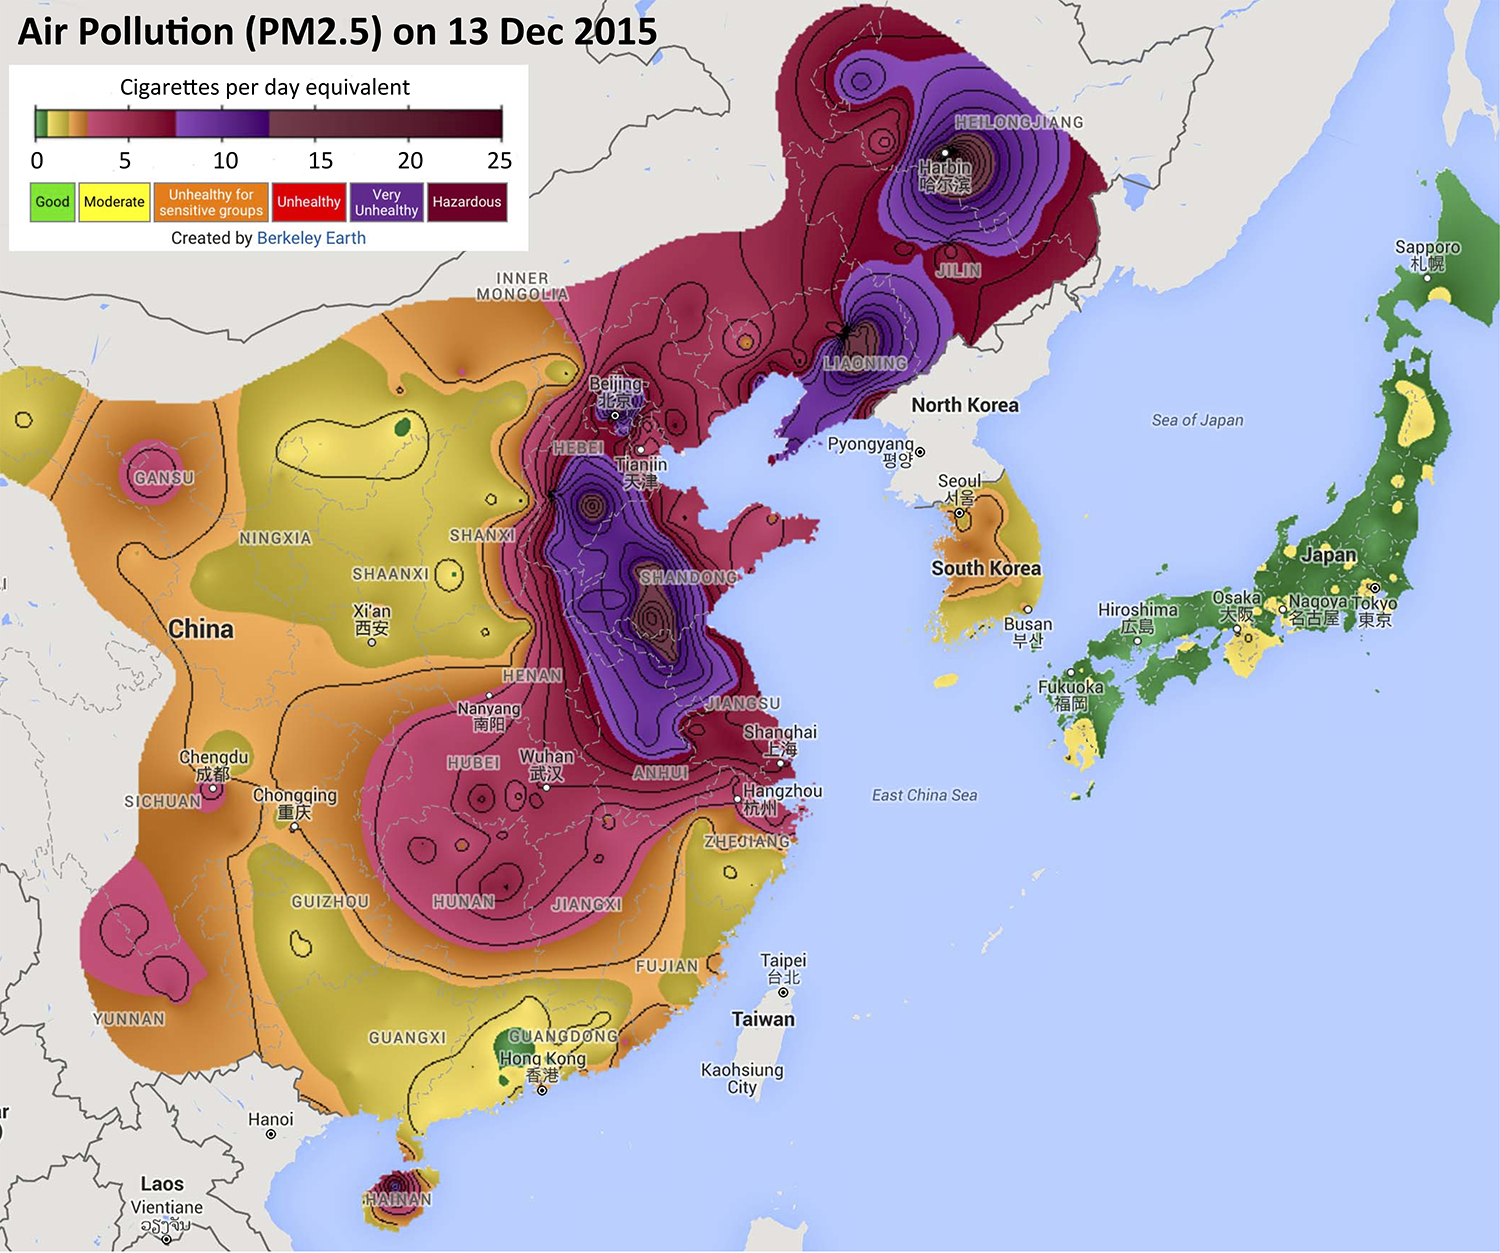 China-cigarette-map-13-Dec-2015-sm.png